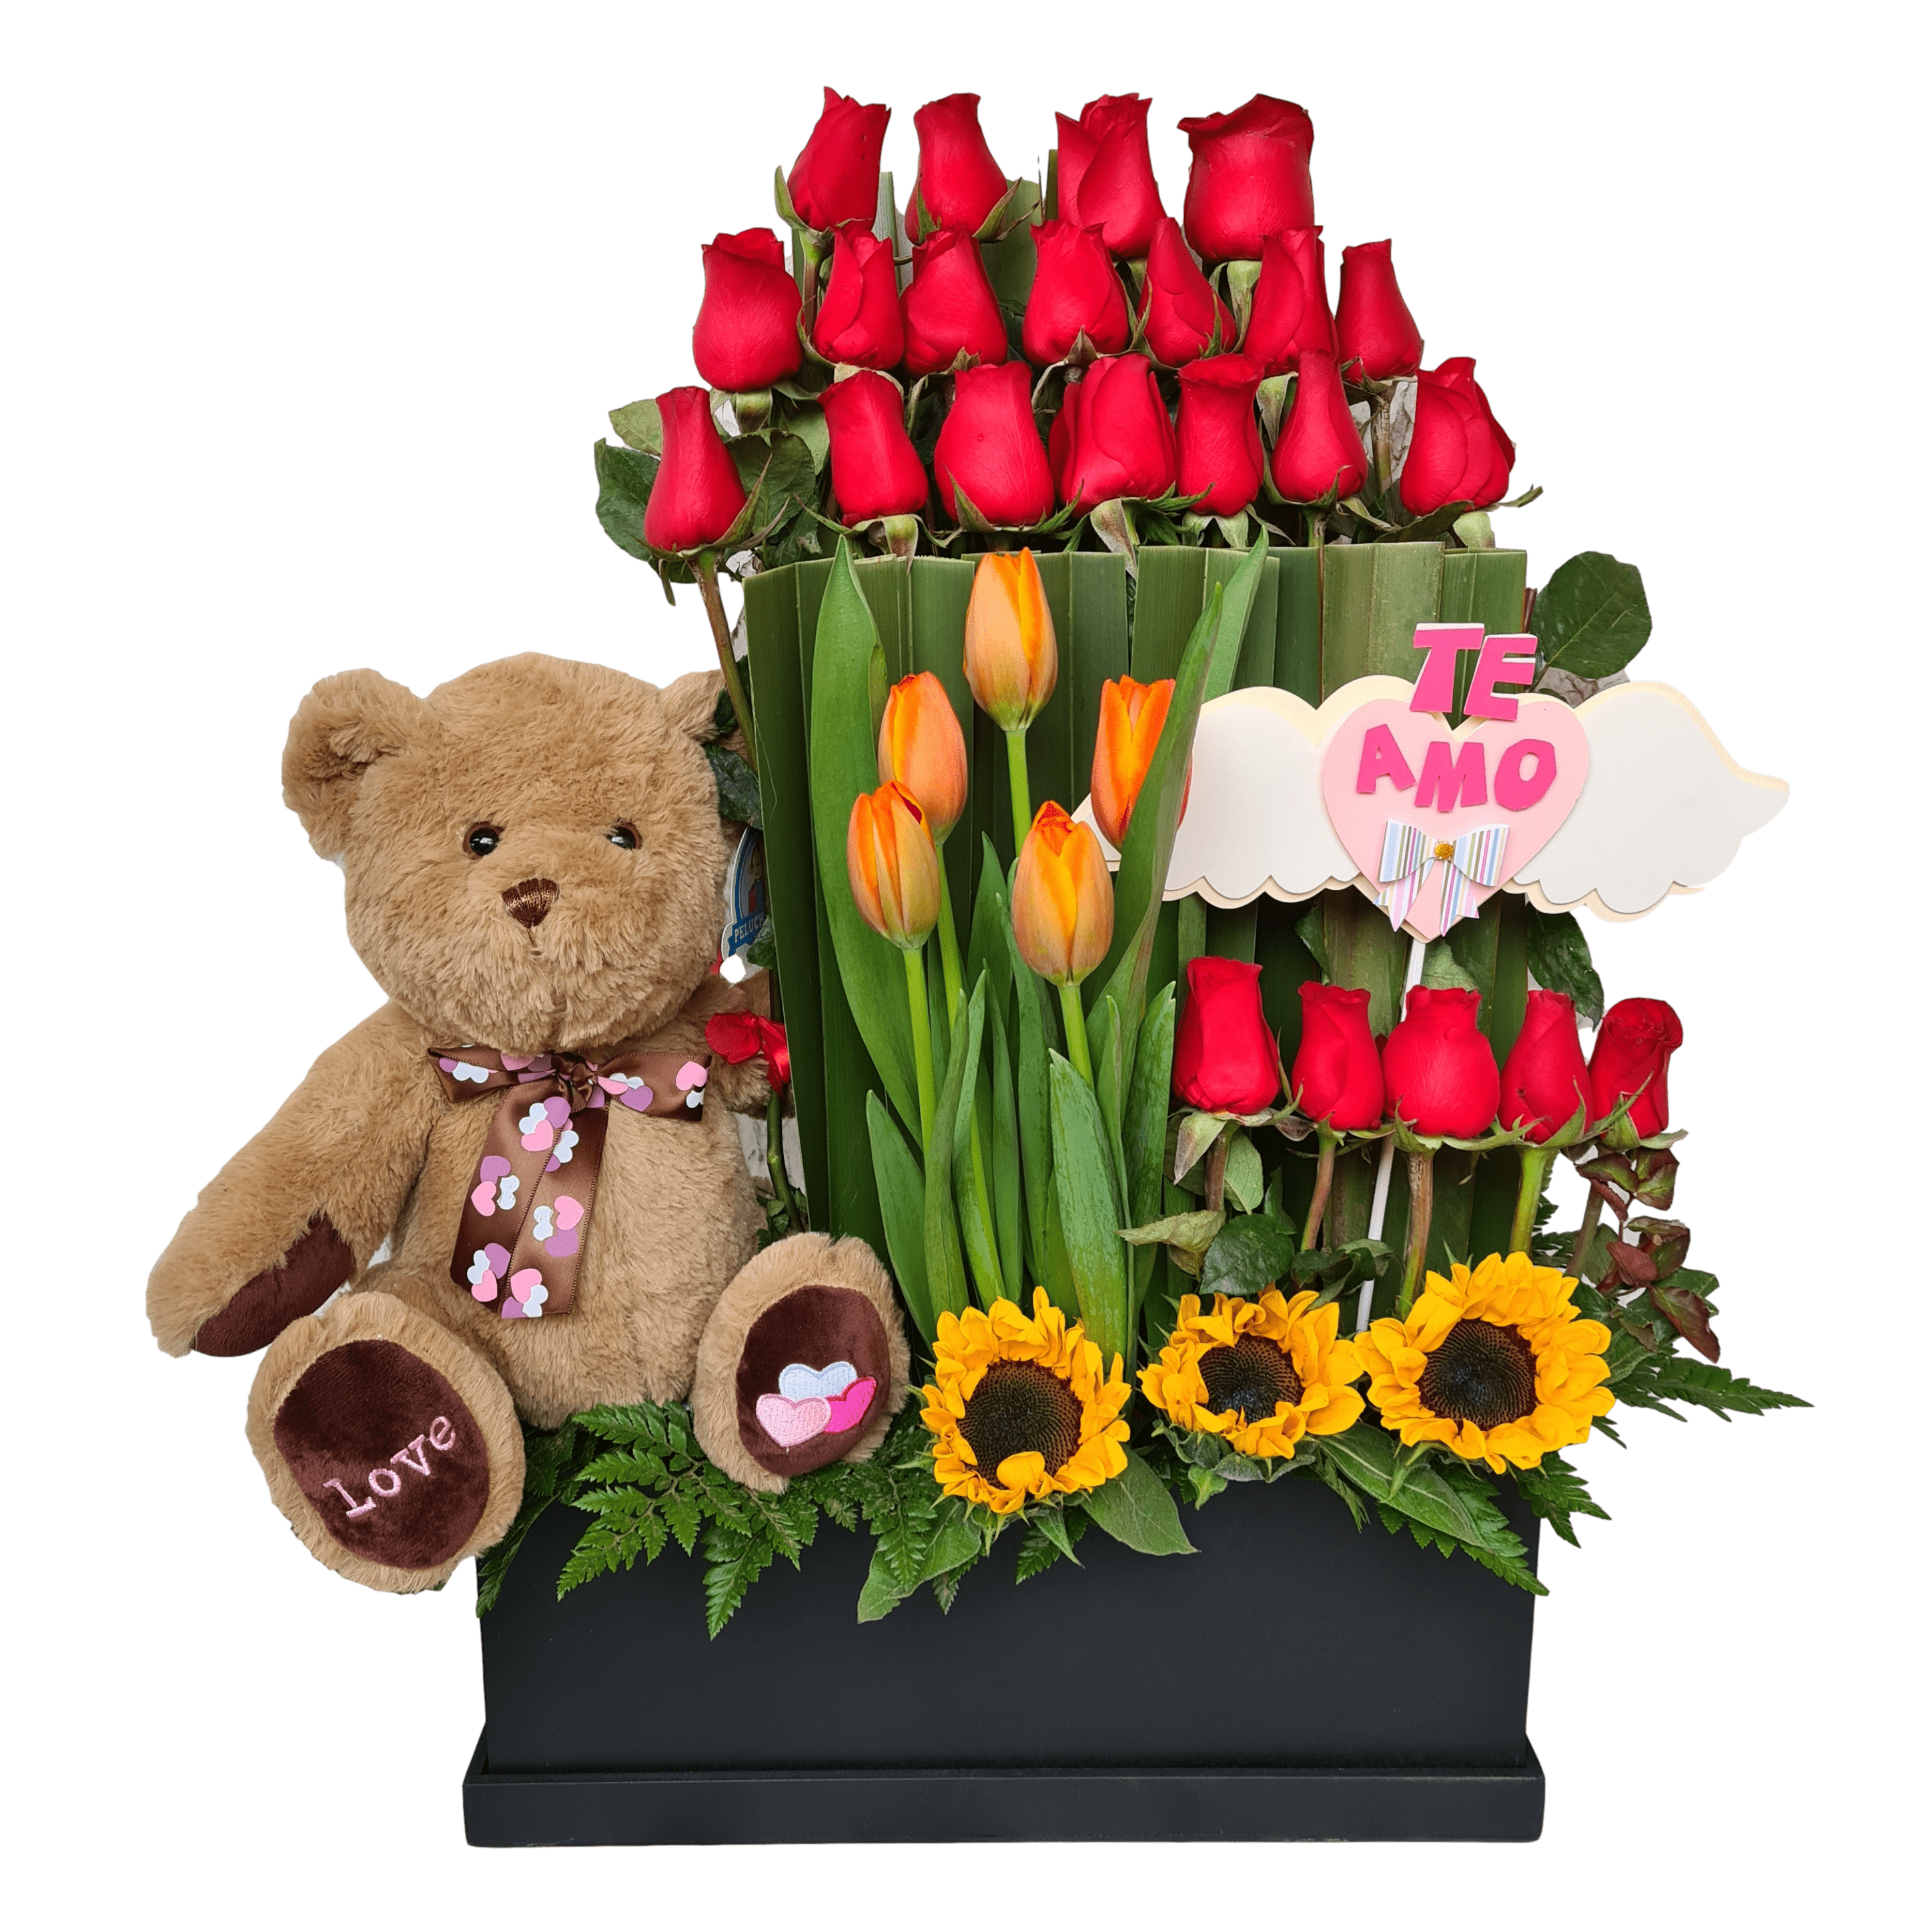 Details 100 picture arreglos de tulipanes con rosas